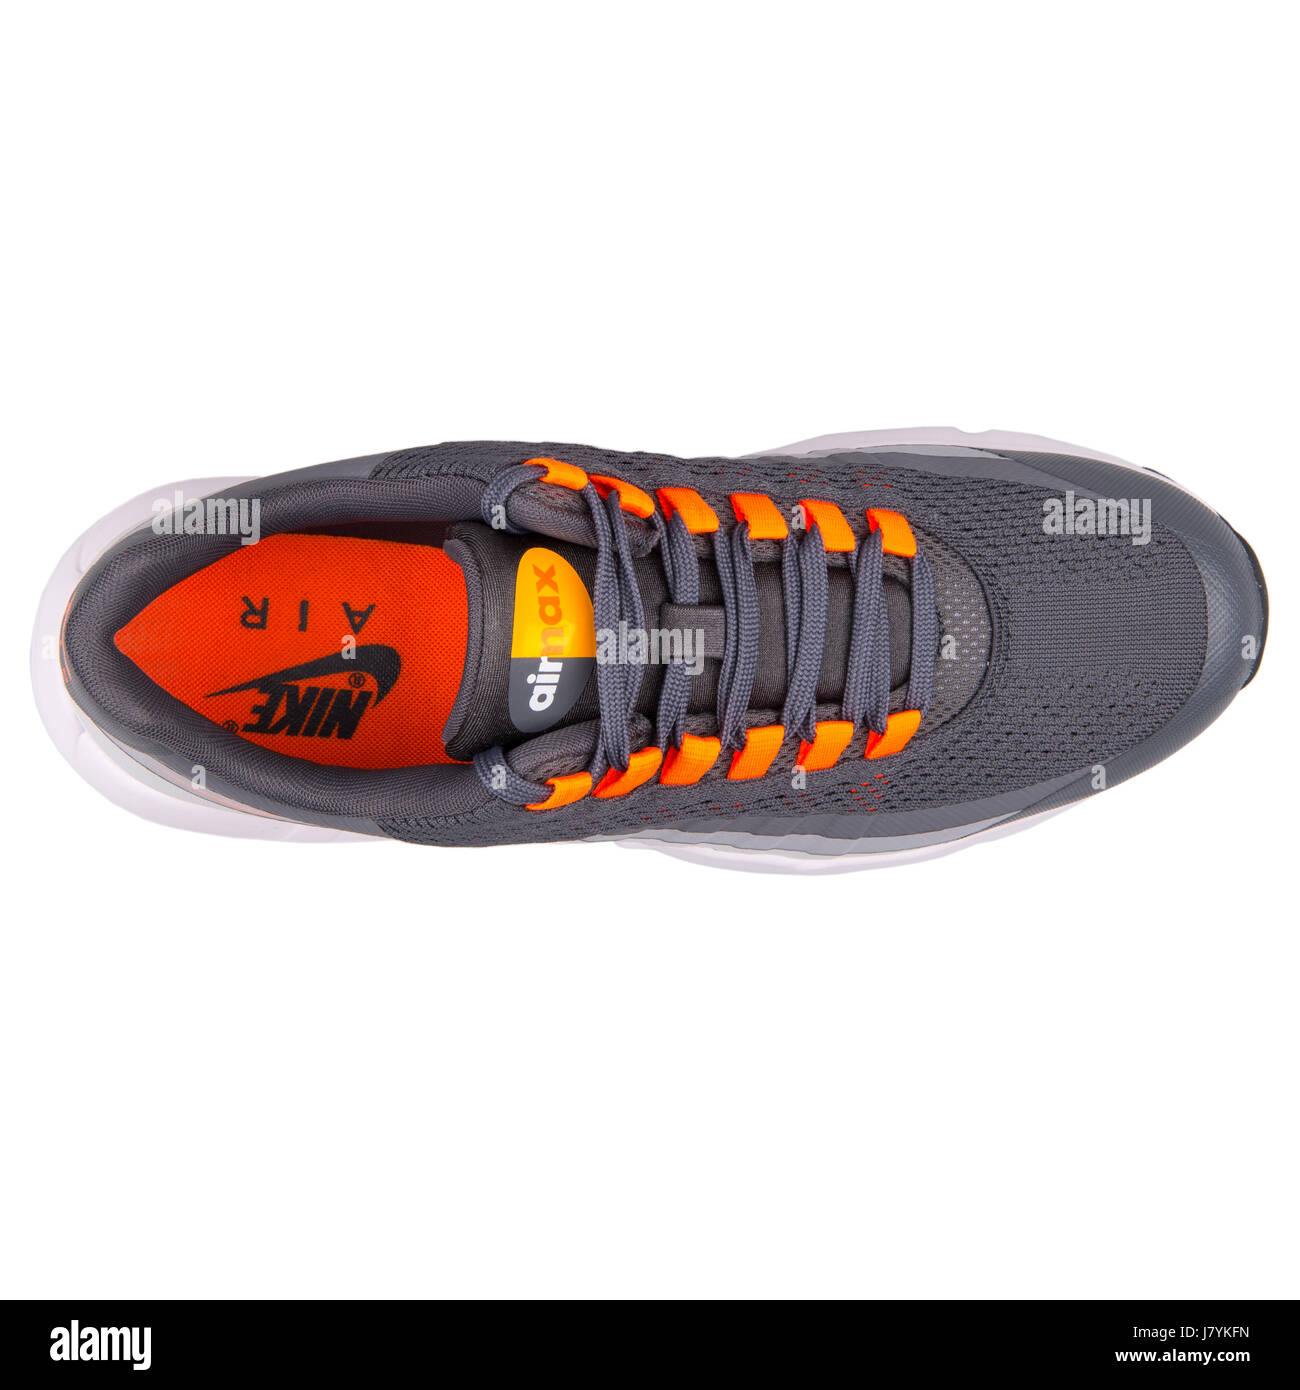 Wmn Nike Air Max 95 gris et orange Ultra Running Sneakers - 749212-001  Photo Stock - Alamy